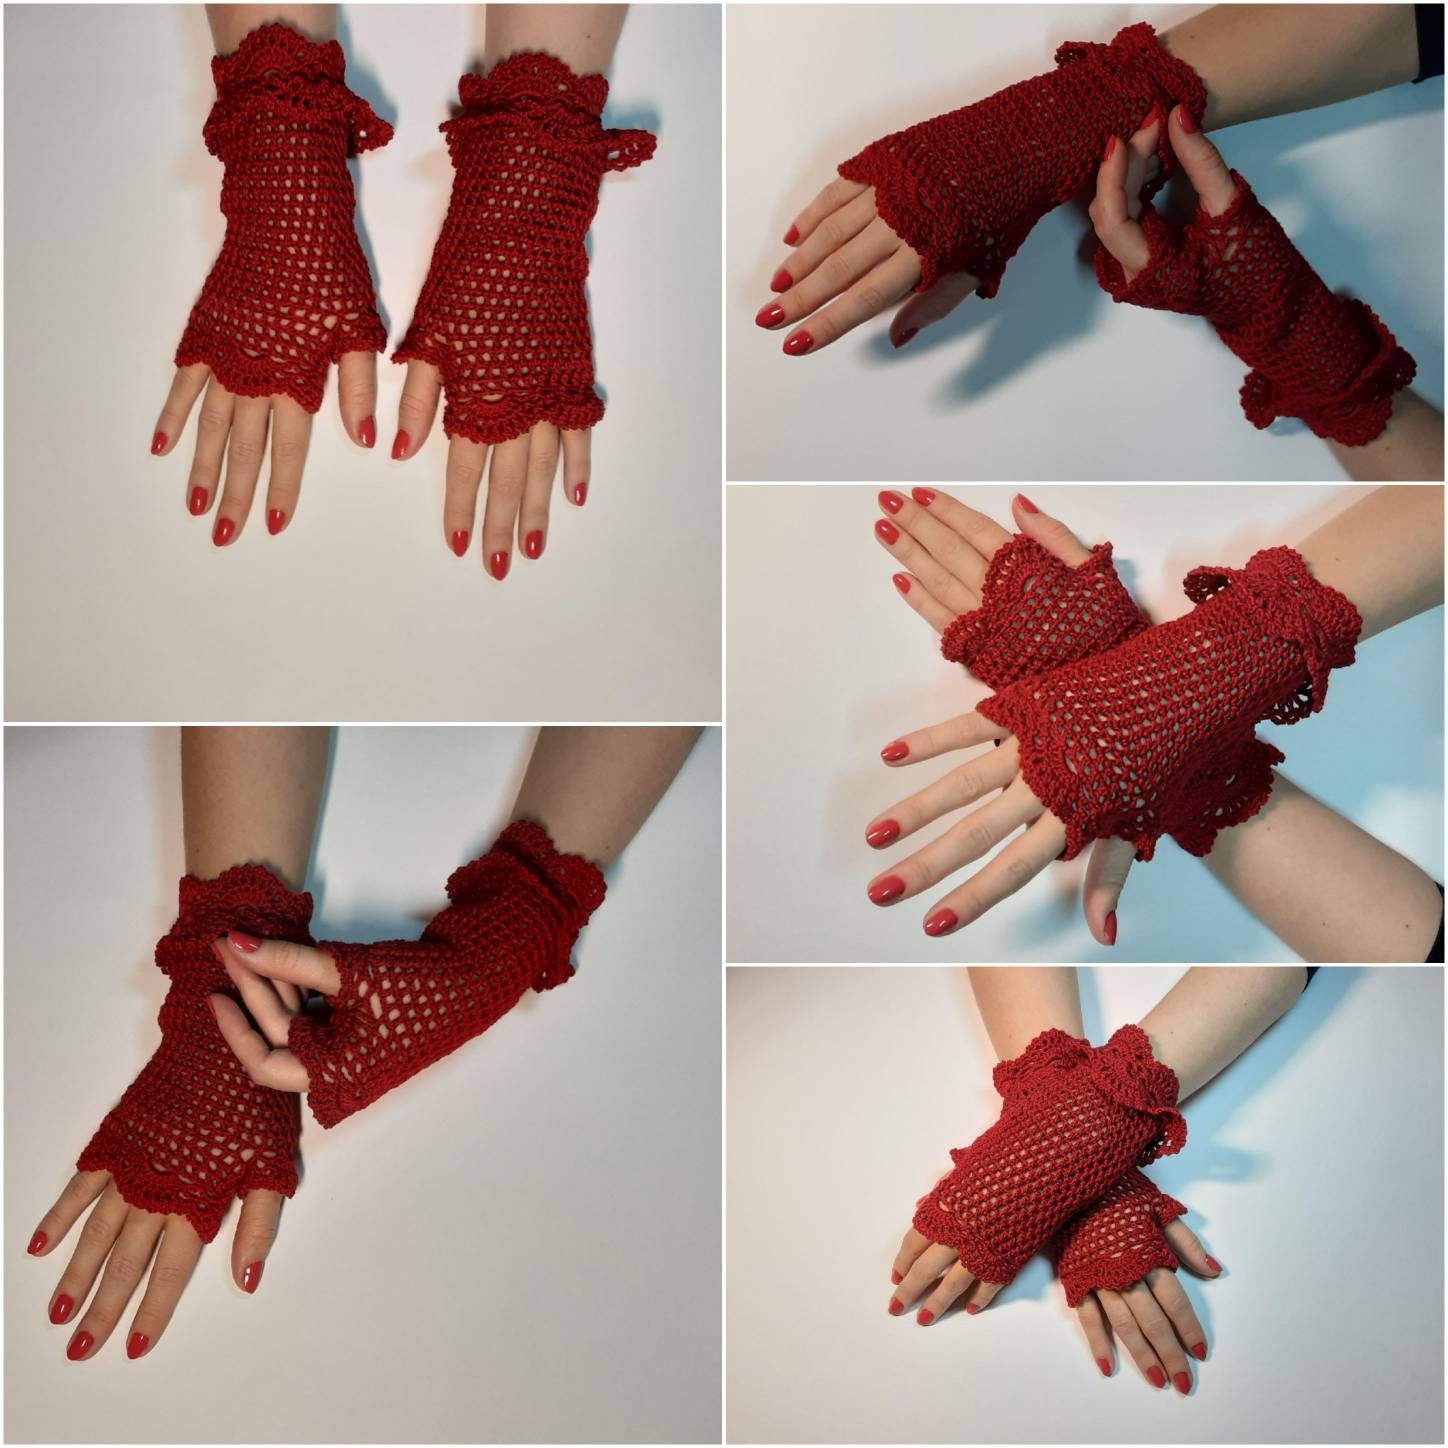 Crochet Fingerless Gloves, Cotton Brown Fingerless Gloves, Lace Gloves, Crochet Mittens, Boho Gloves, Arm Warmers, Knitted Ruffle Gloves